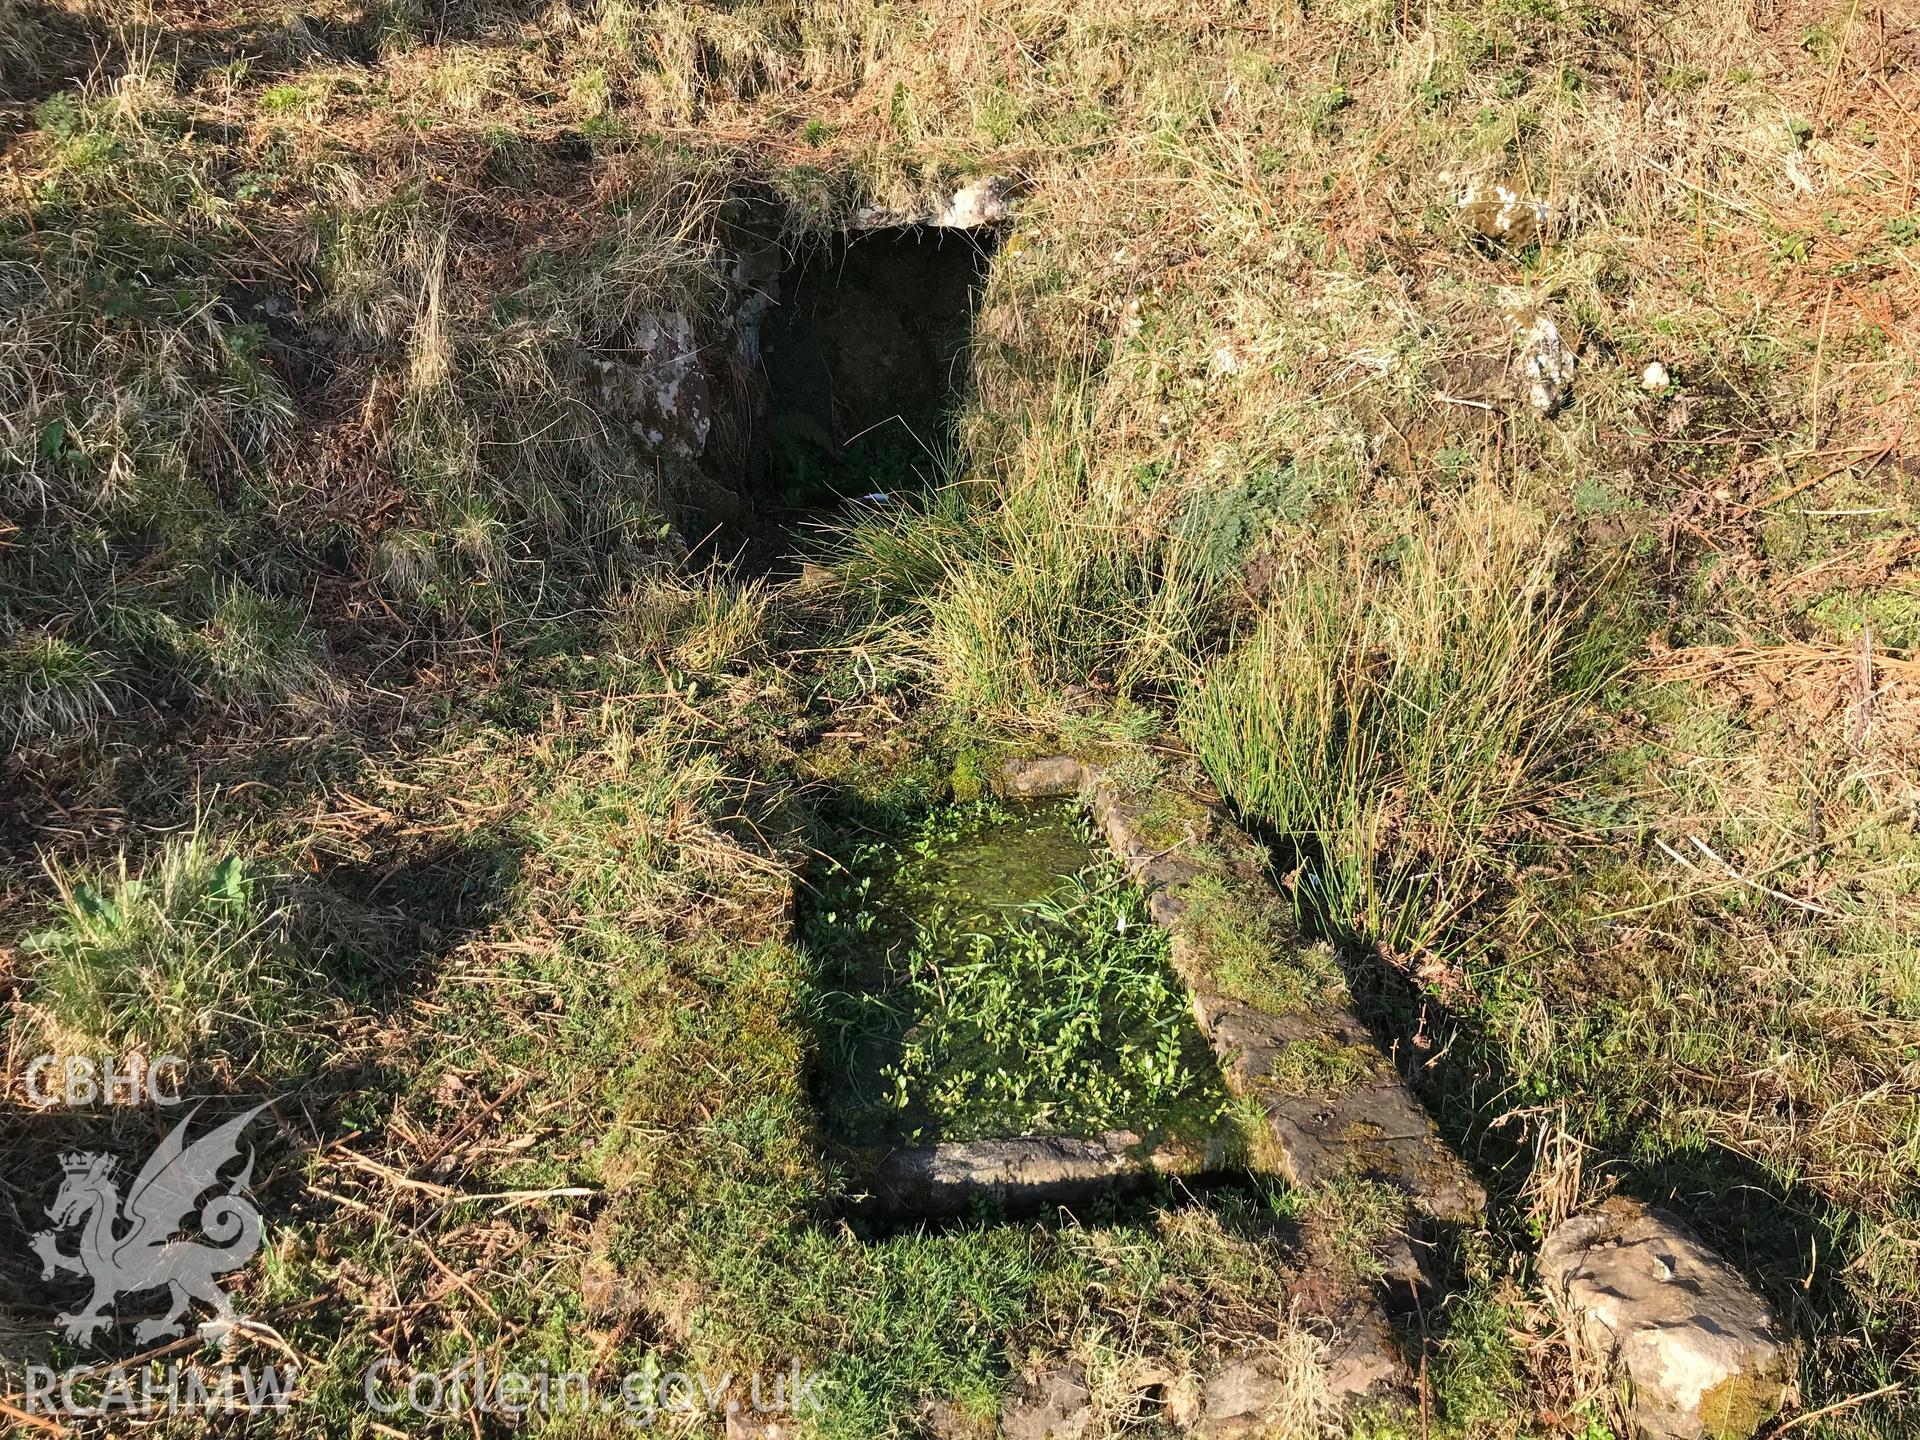 Colour photo showing view of St Tudno's Well, Llandudno, taken by Paul R. Davis, 2018.